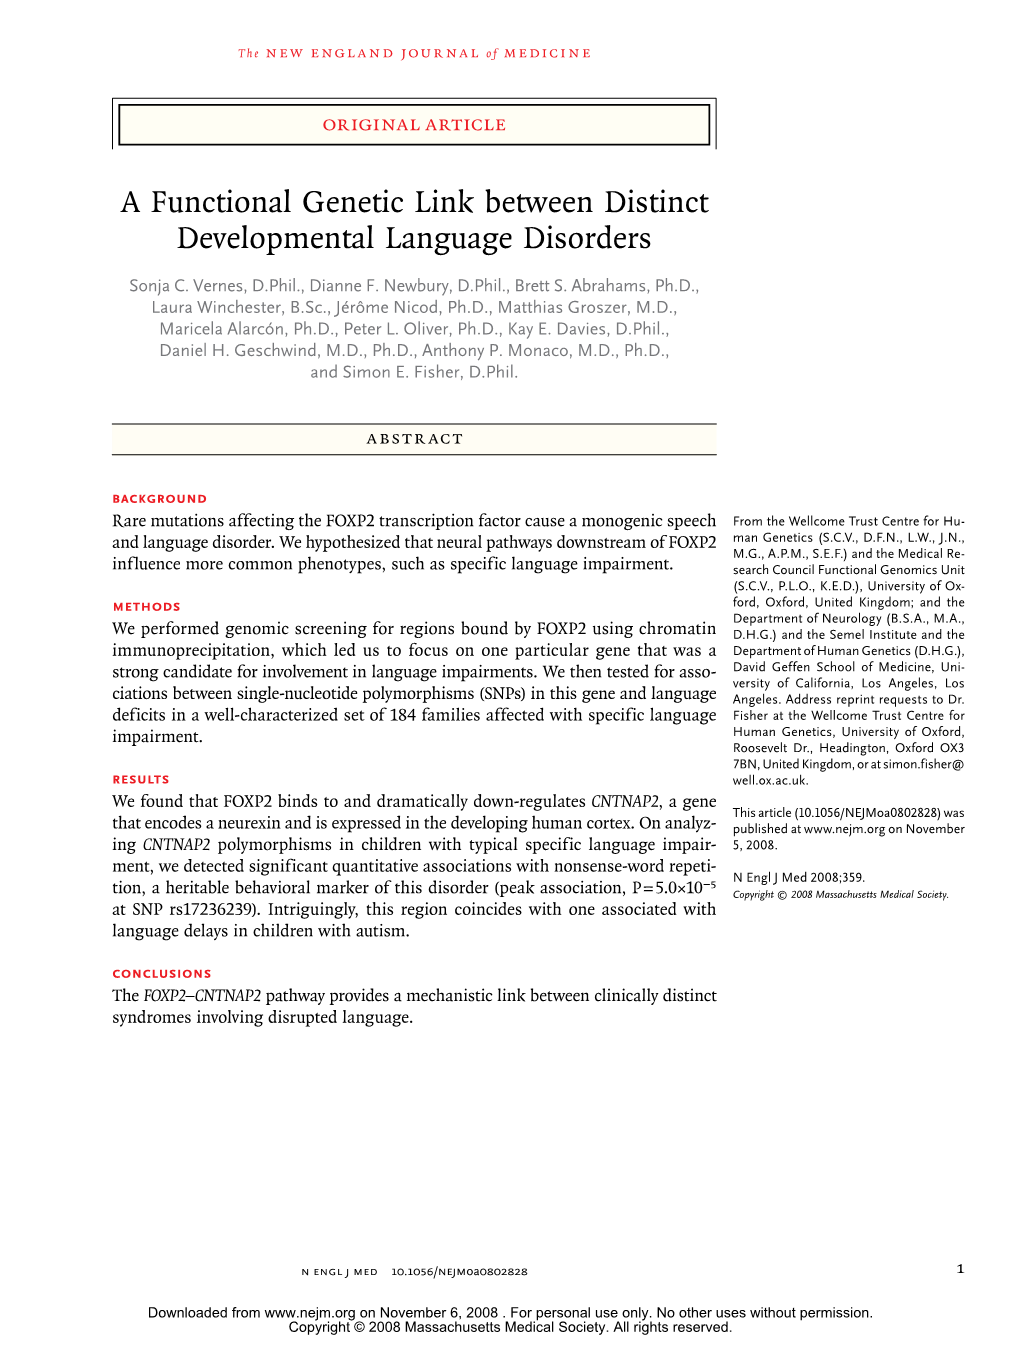 A Functional Genetic Link Between Distinct Developmental Language Disorders